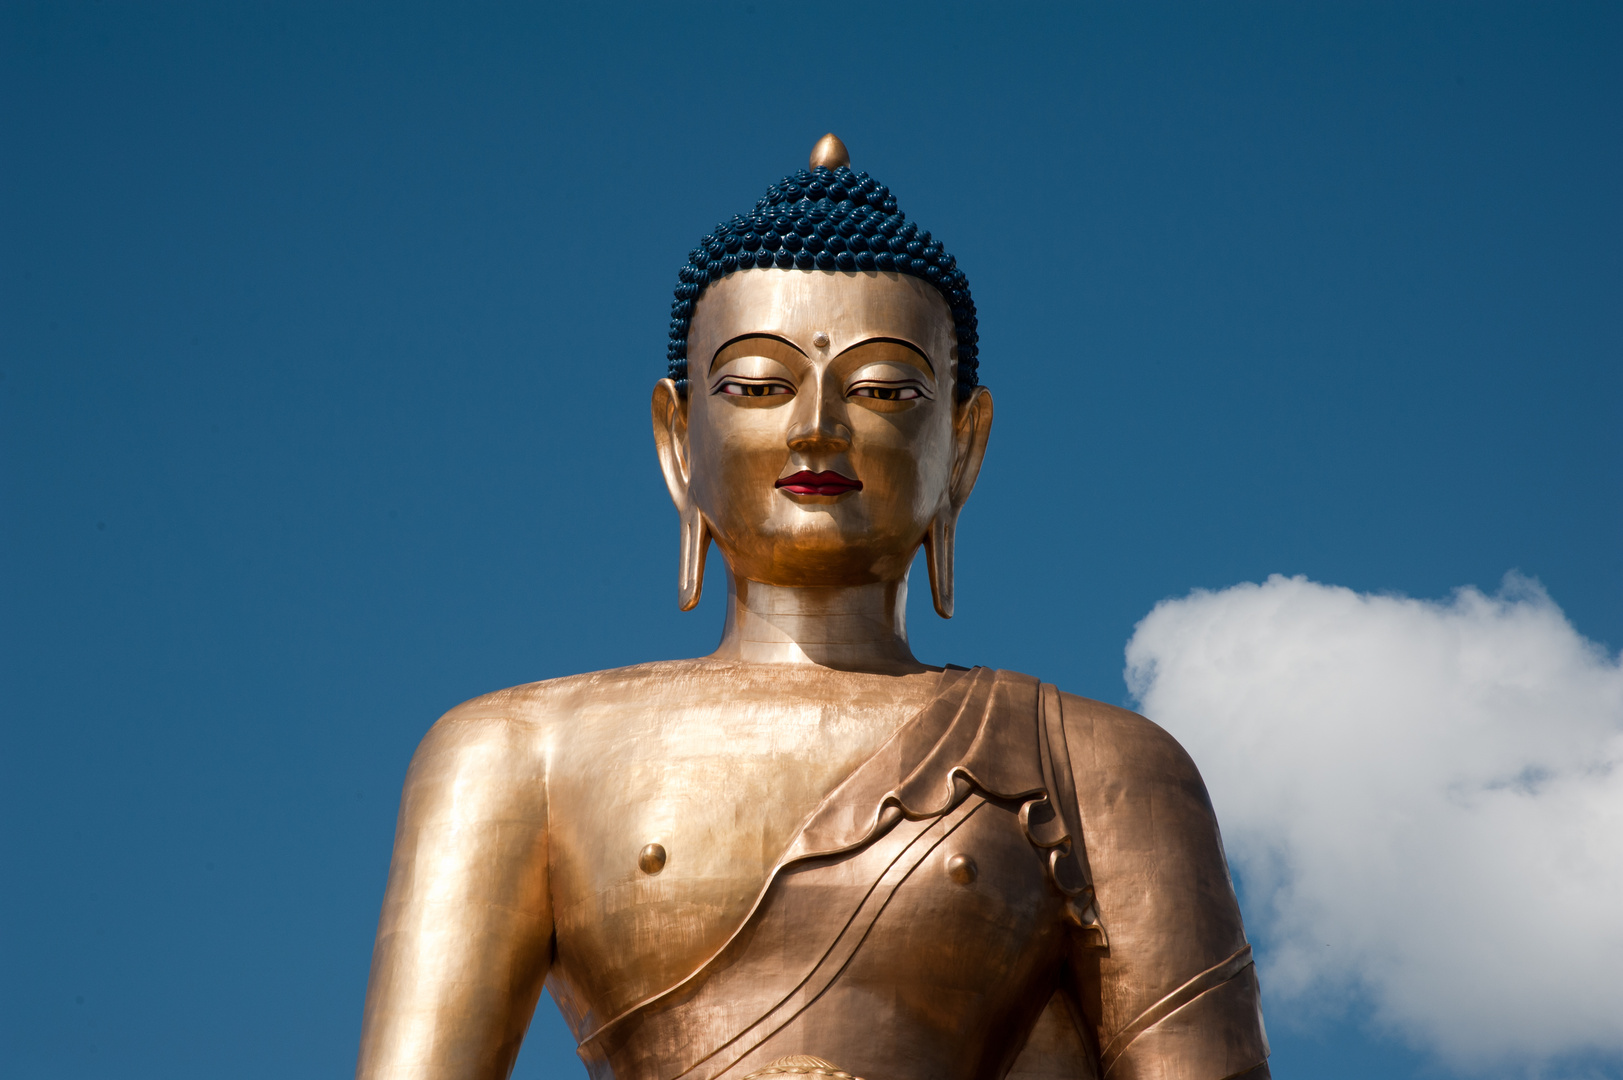 Thimpu, Buddha Point